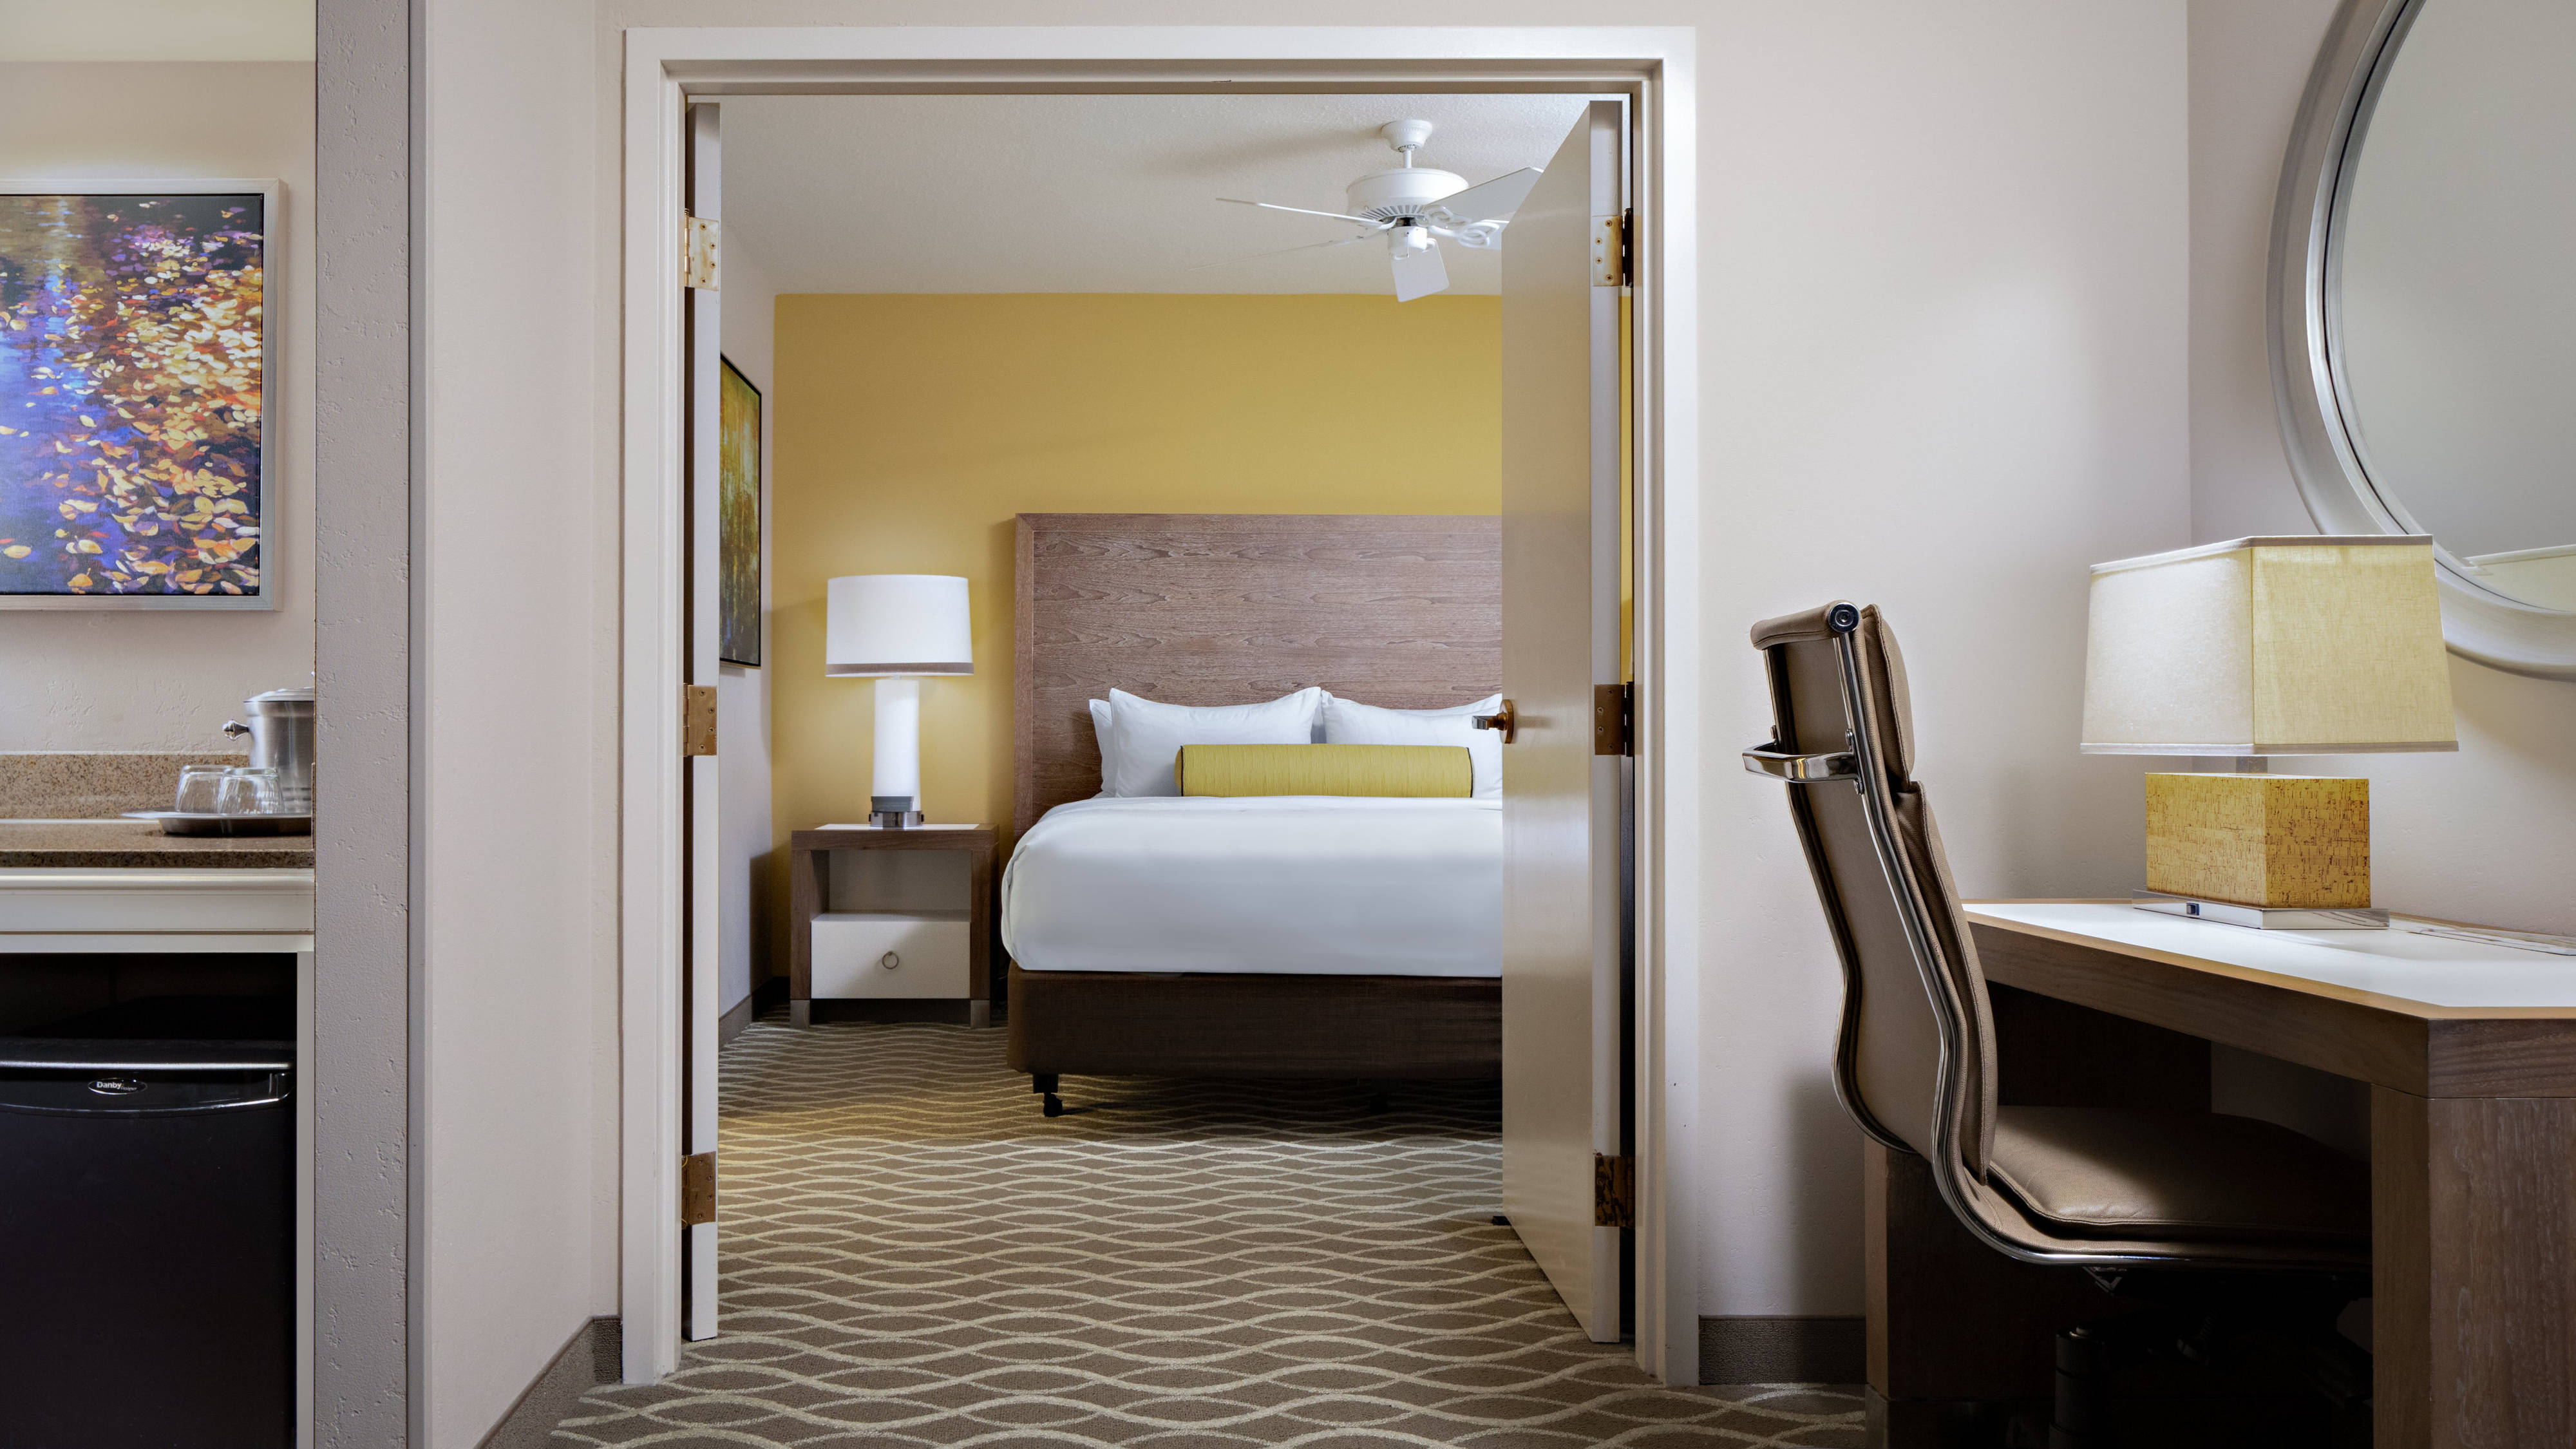 Buy Luxury Hotel Bedding from Marriott Hotels - Vanity Mirrors